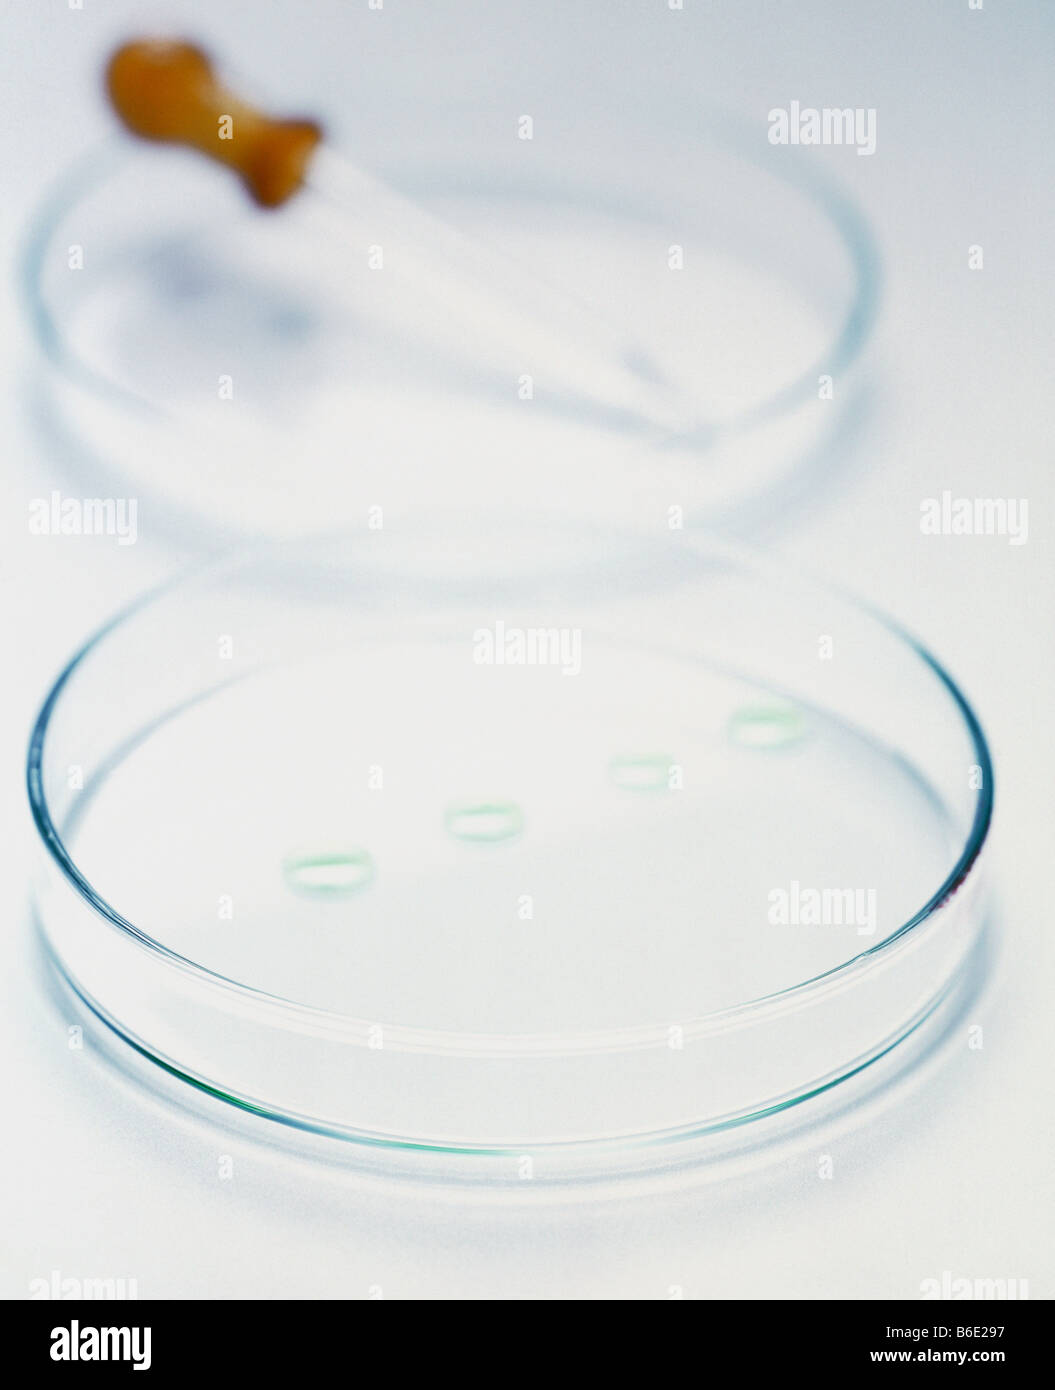 Laboratory glassware. Opened petri dish containing four drops of liquid and a pipette. Stock Photo